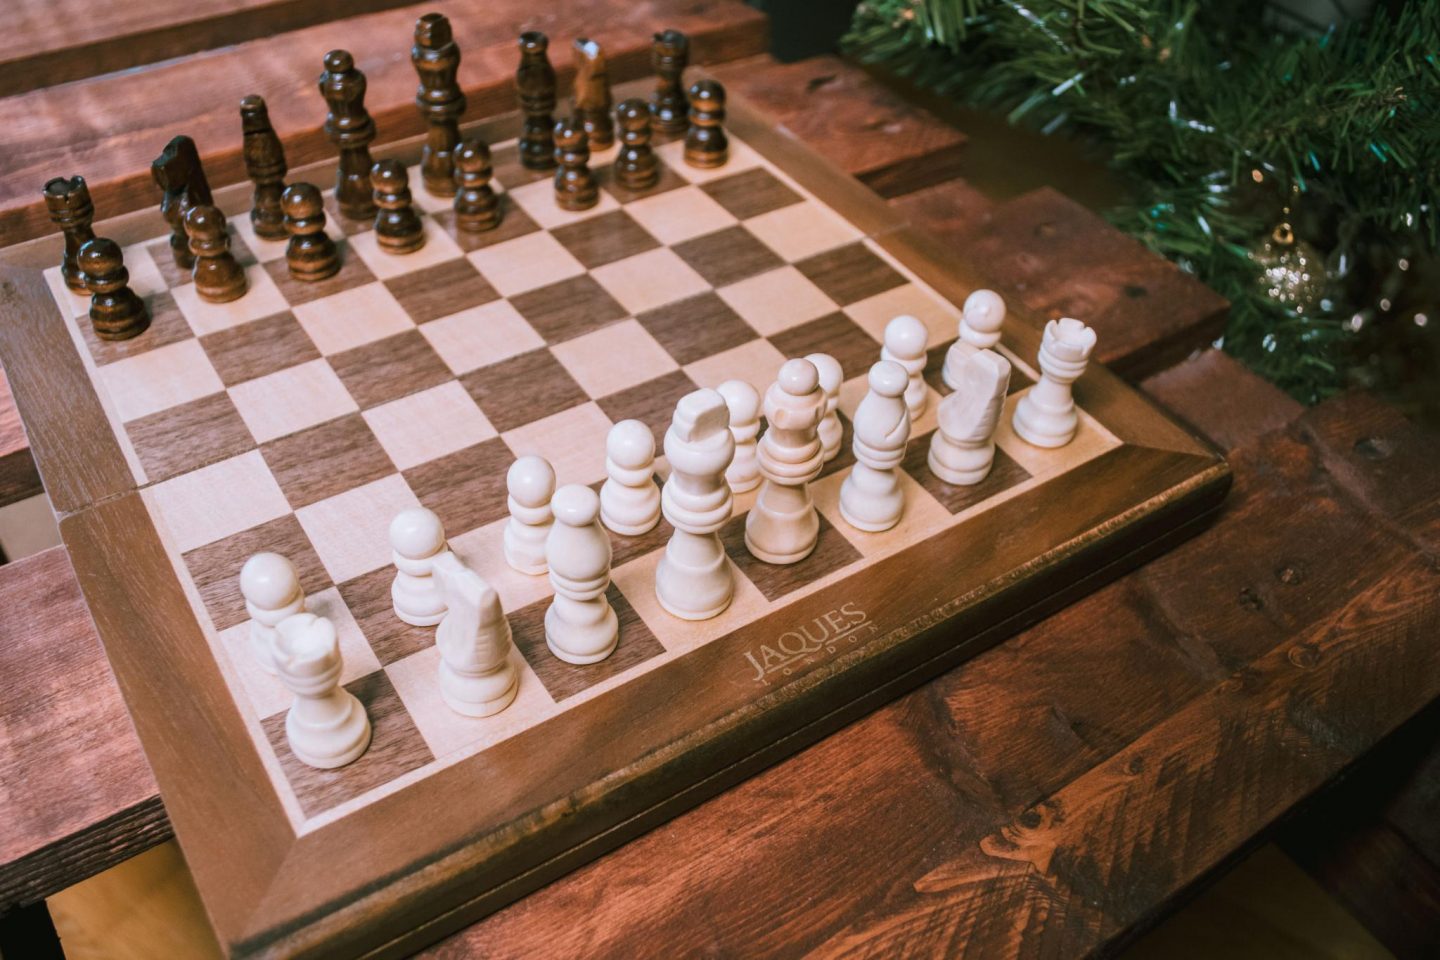 Chess set 